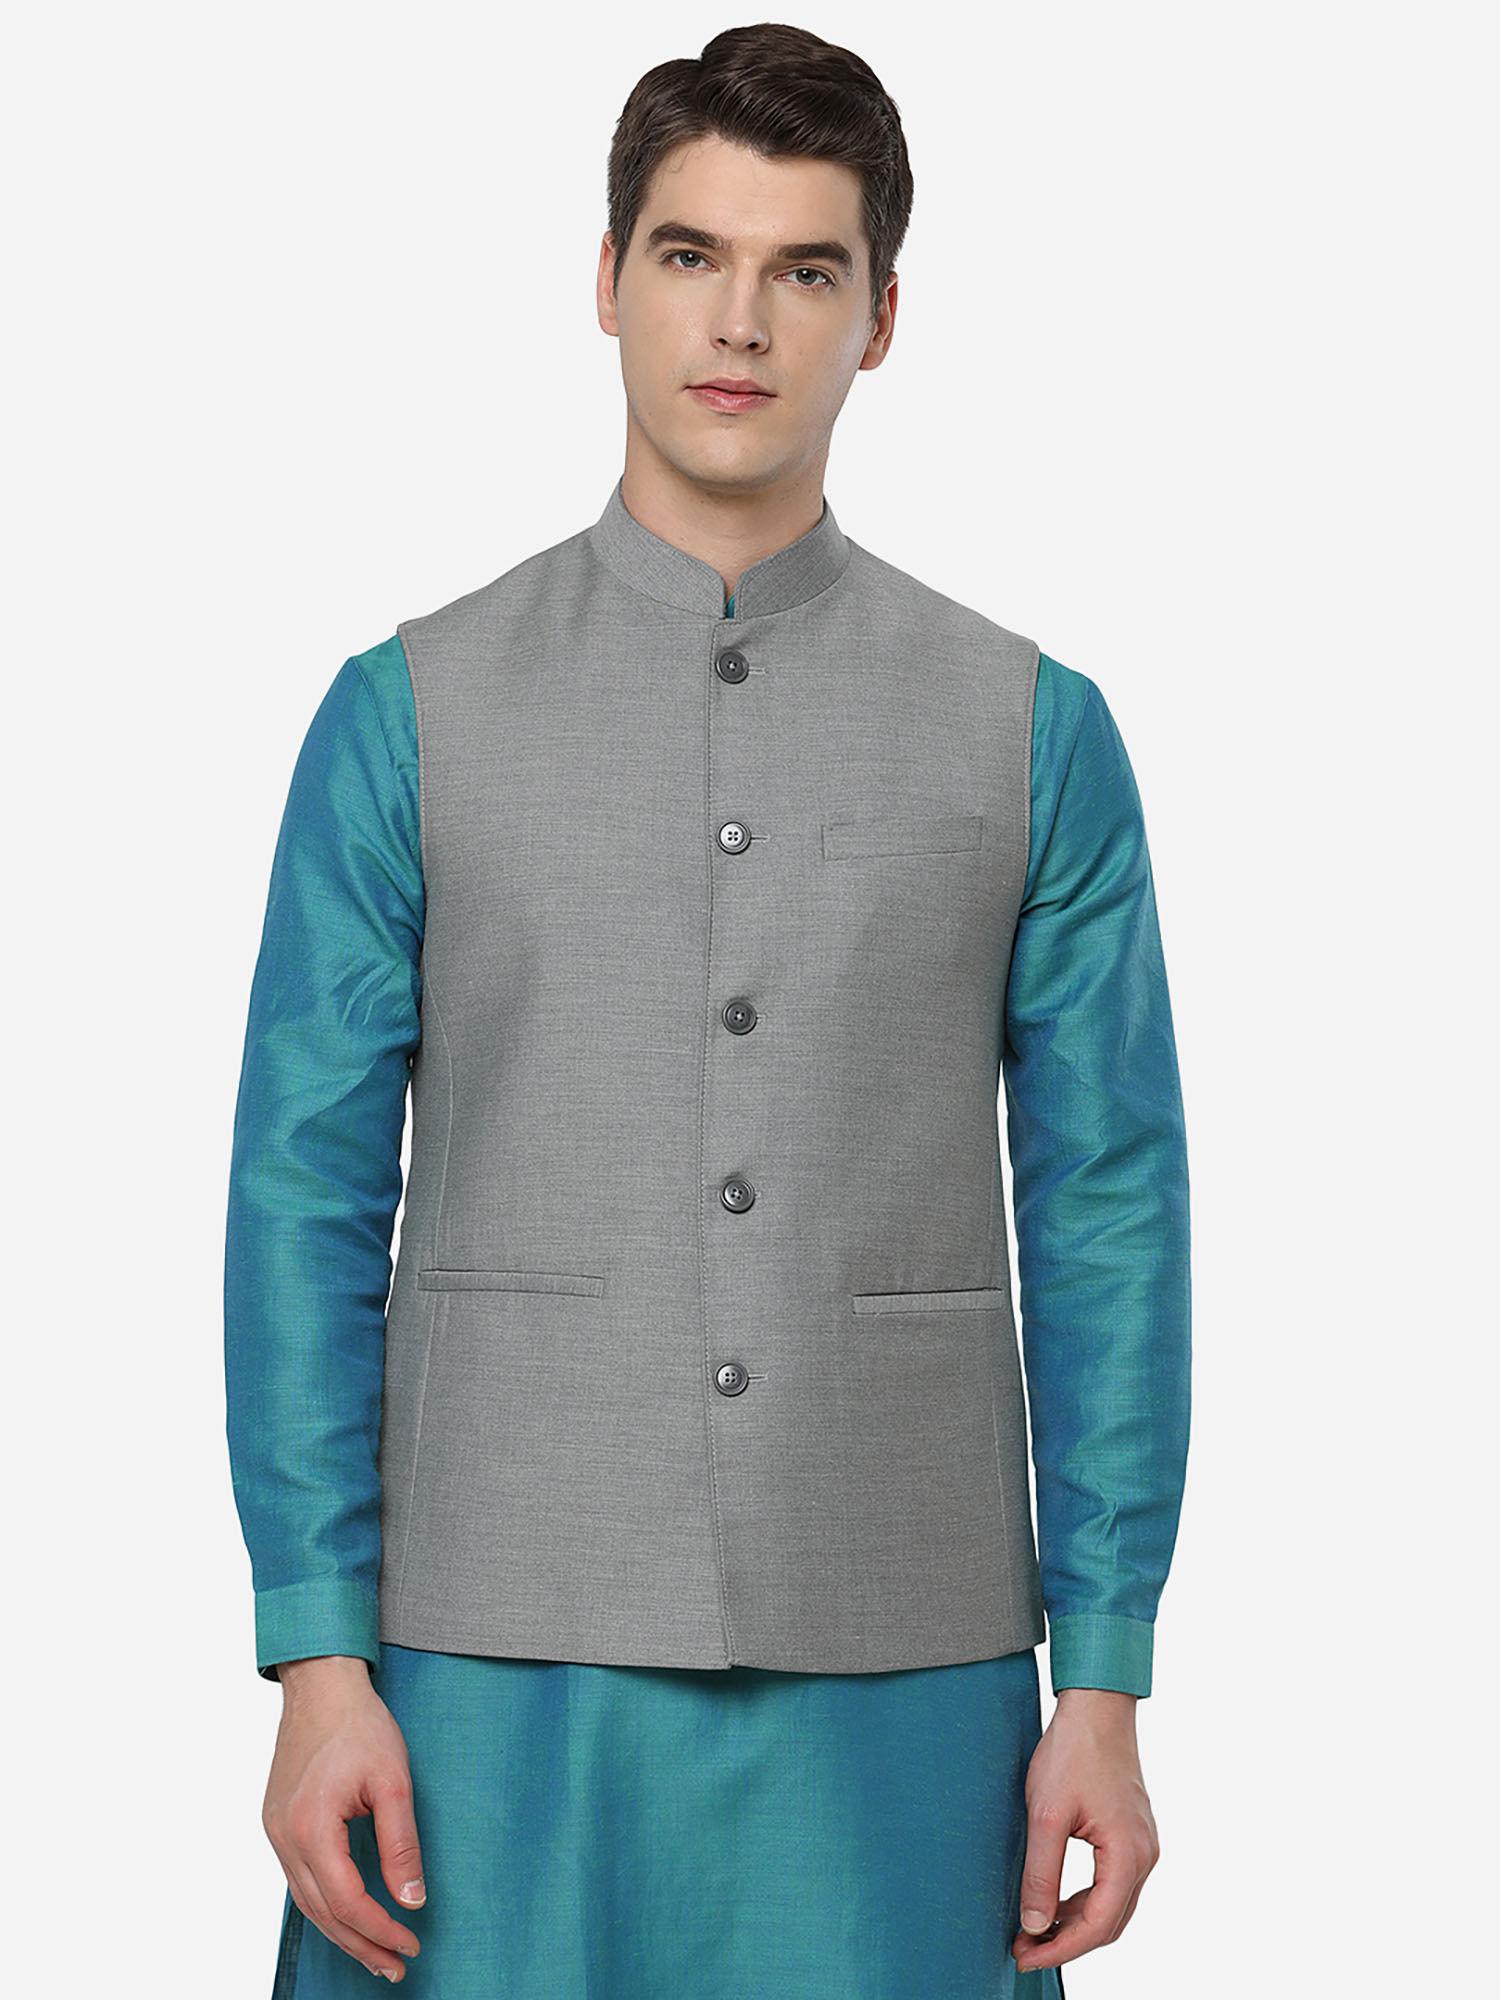 mens solid grey poly wool regular fit modi jacket